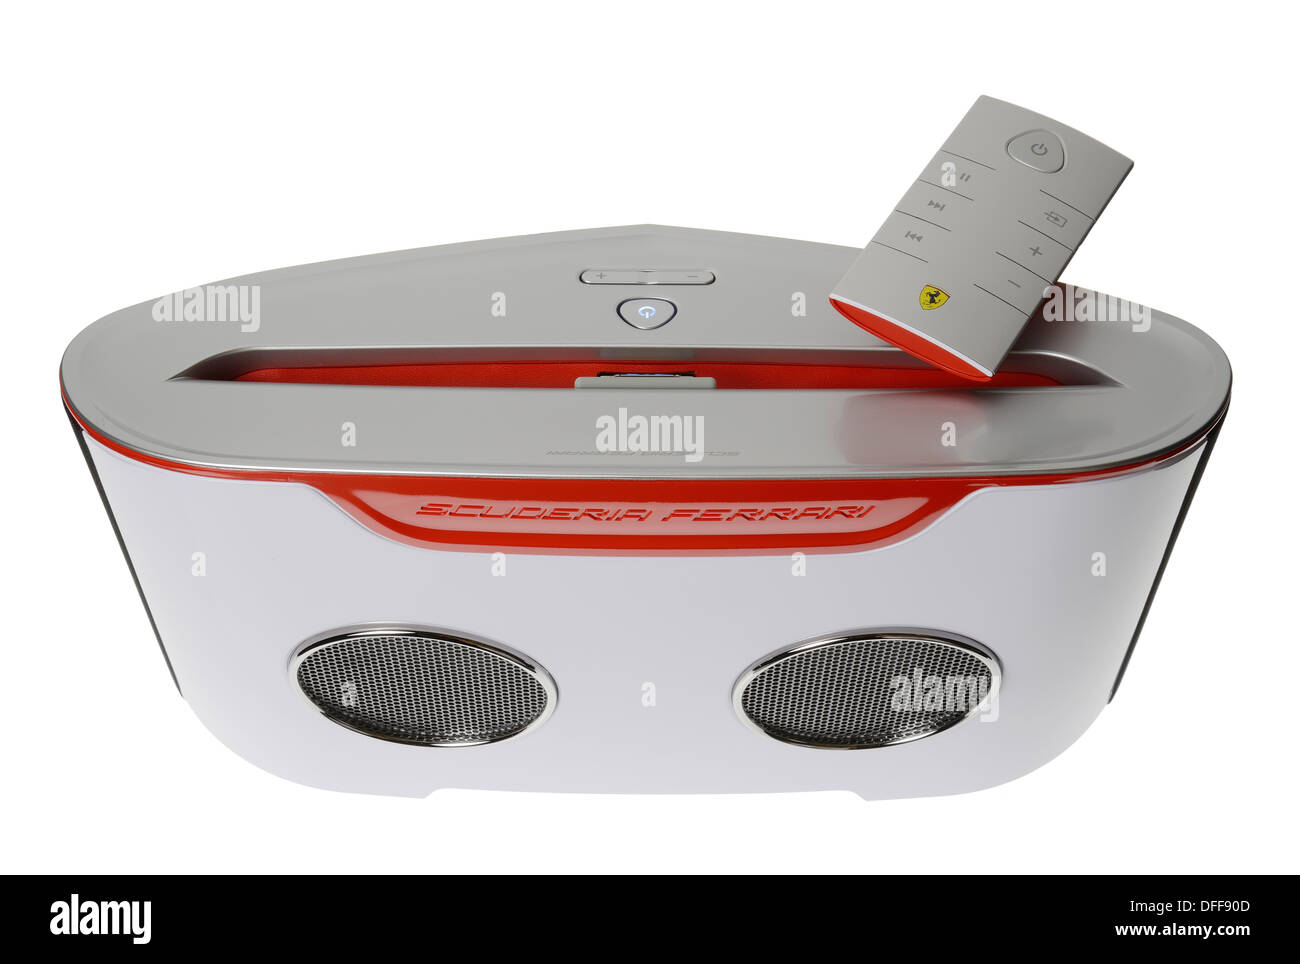 Scuderia Ferrari ipod speaker dock by Logic3. Stock Photo